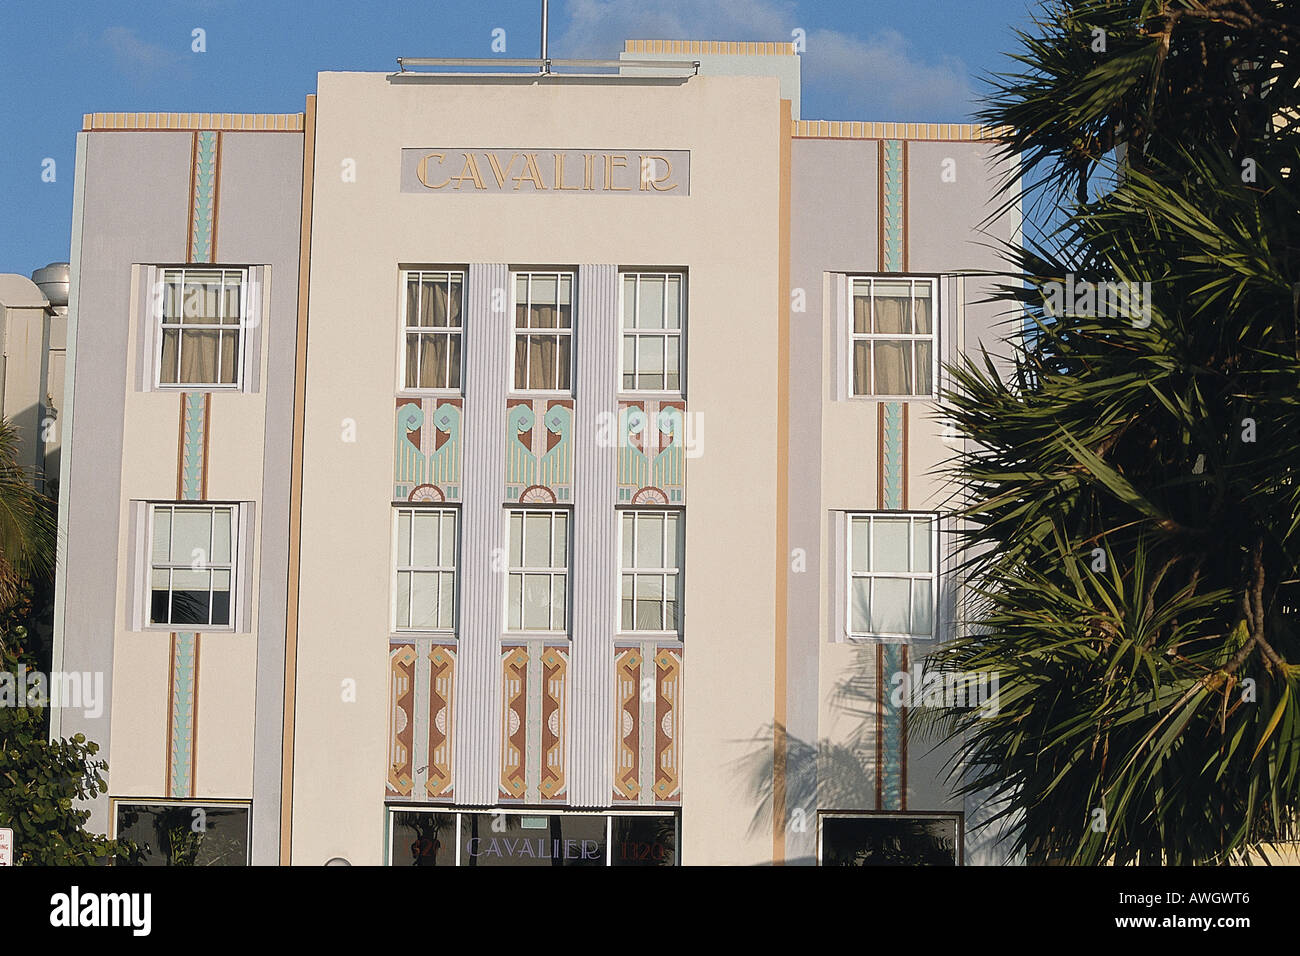 USA, Florida, Miami, Ocean Drive, Cavalier, façade Art déco Banque D'Images